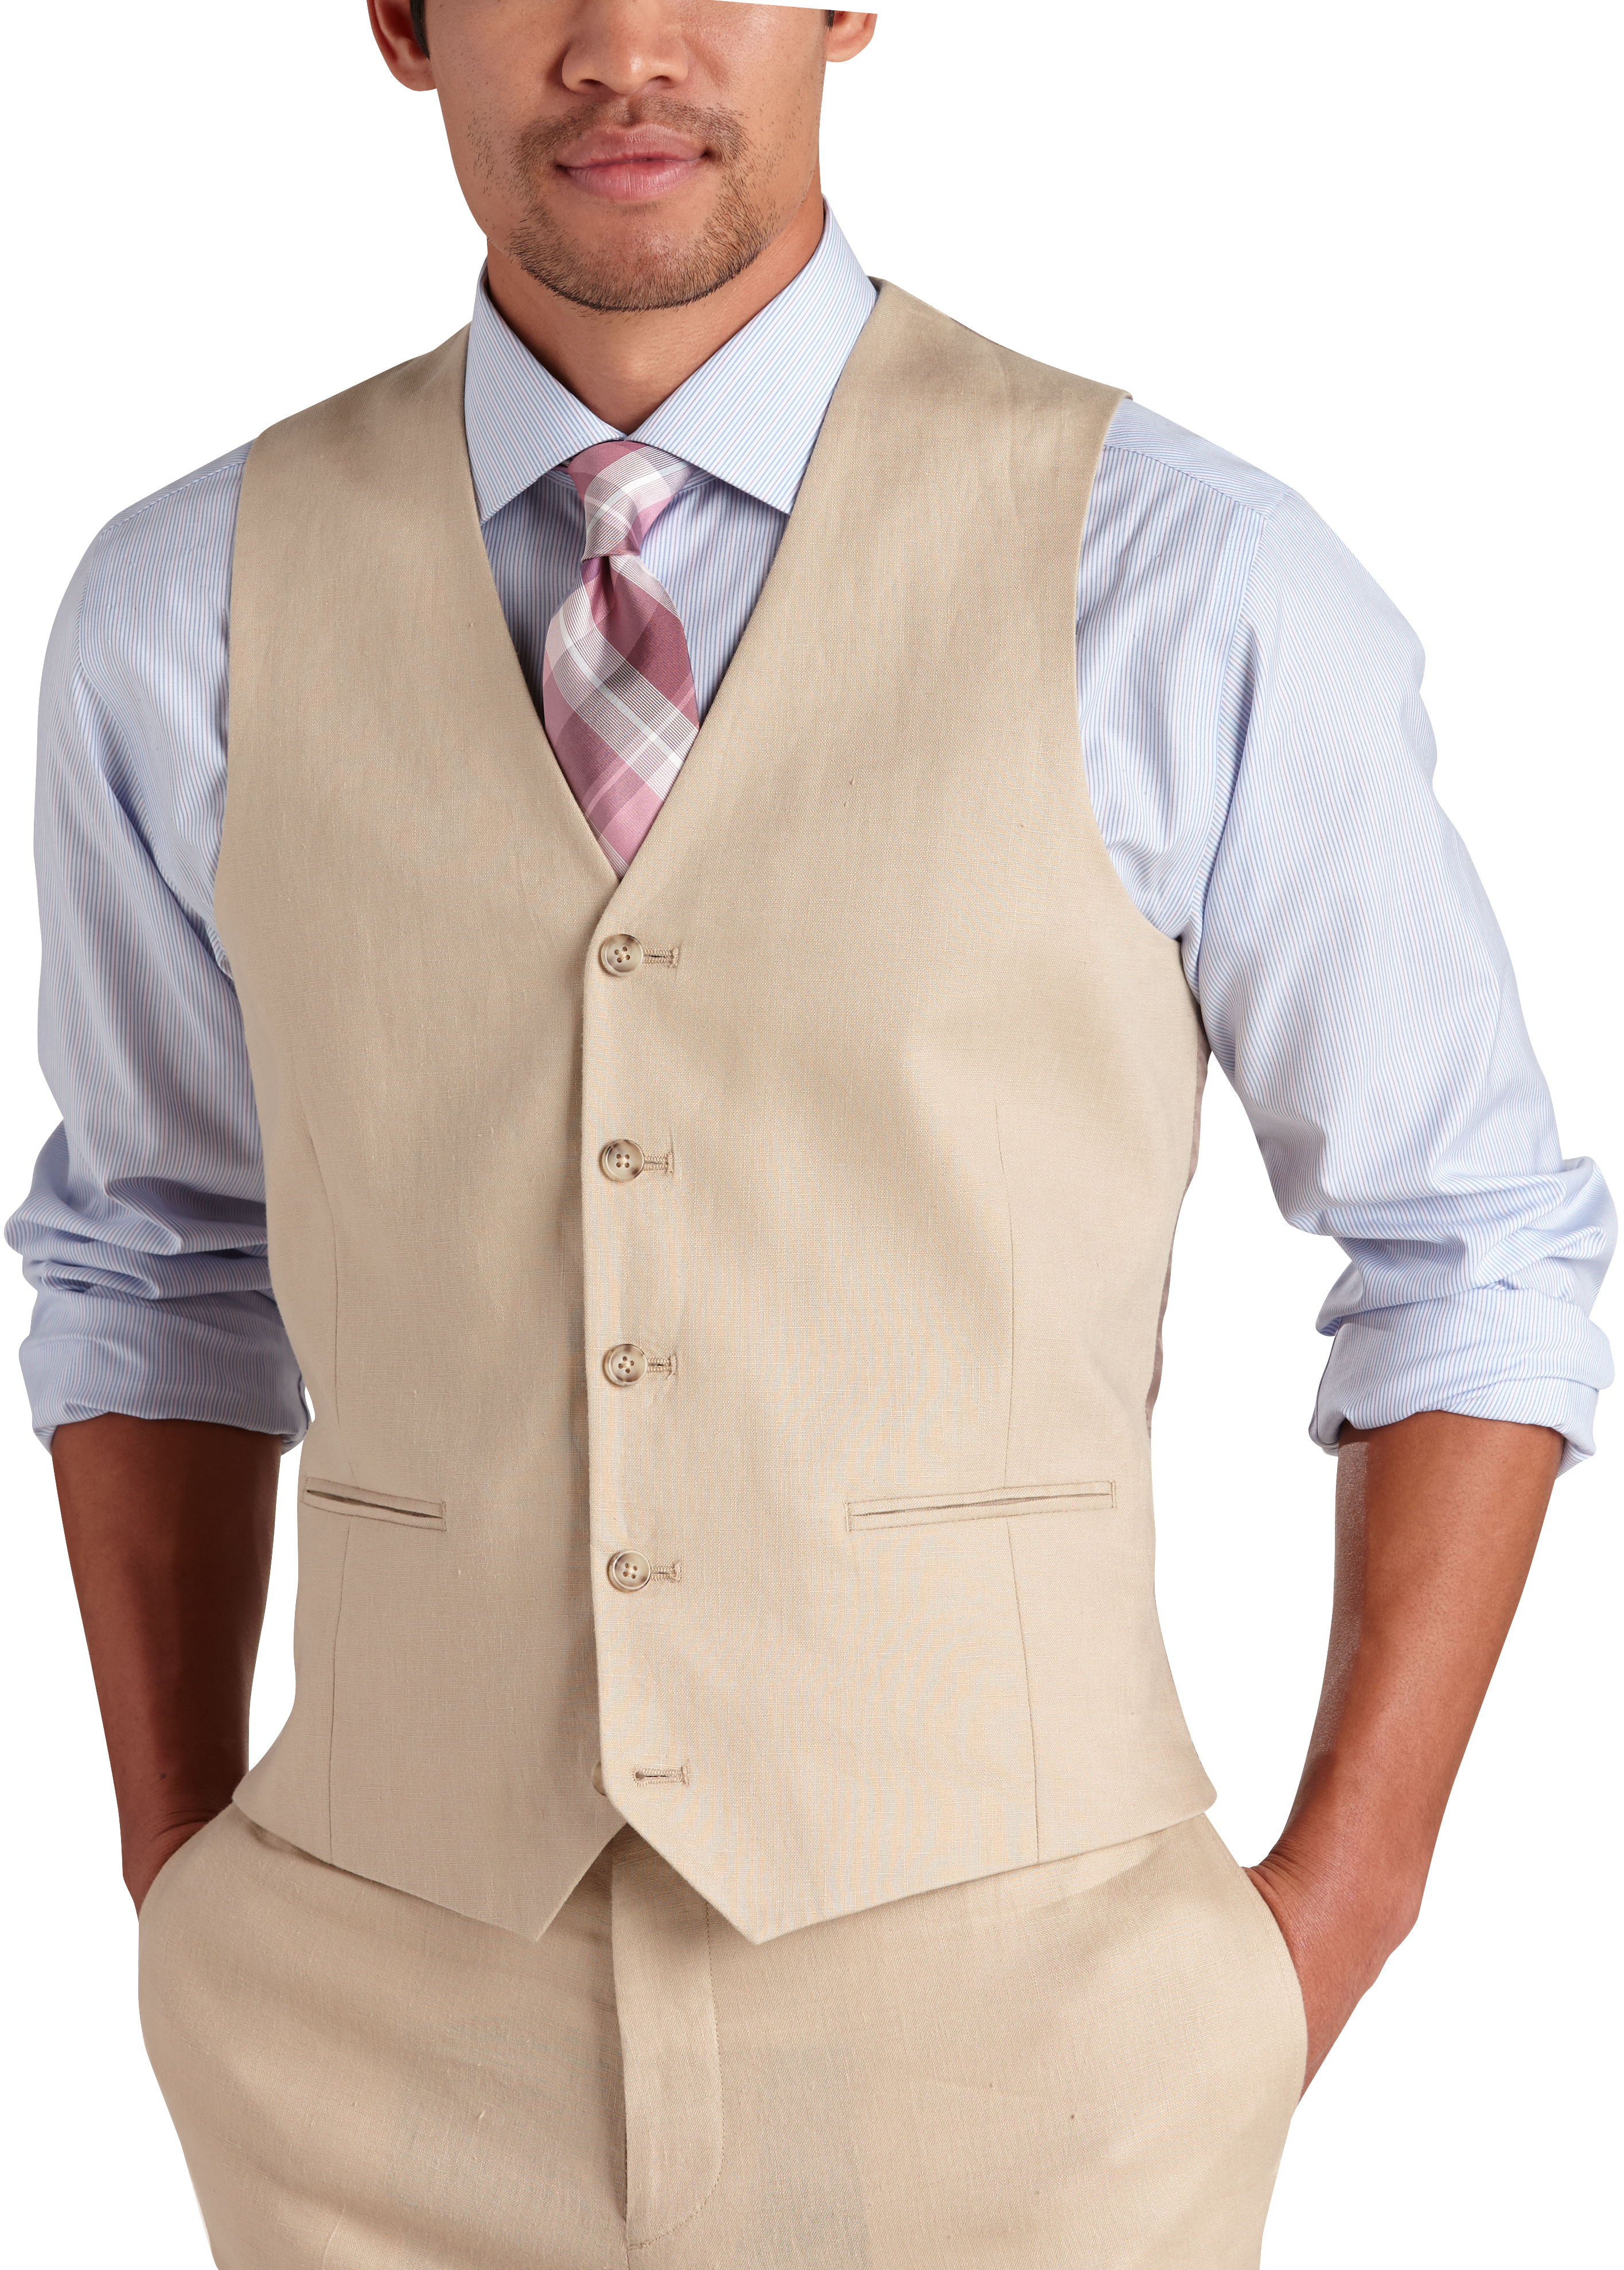 New Mens Tan Linen Suit Vest Long Self Tie Summer Wedding Tuxedo FREE SHIPPING 